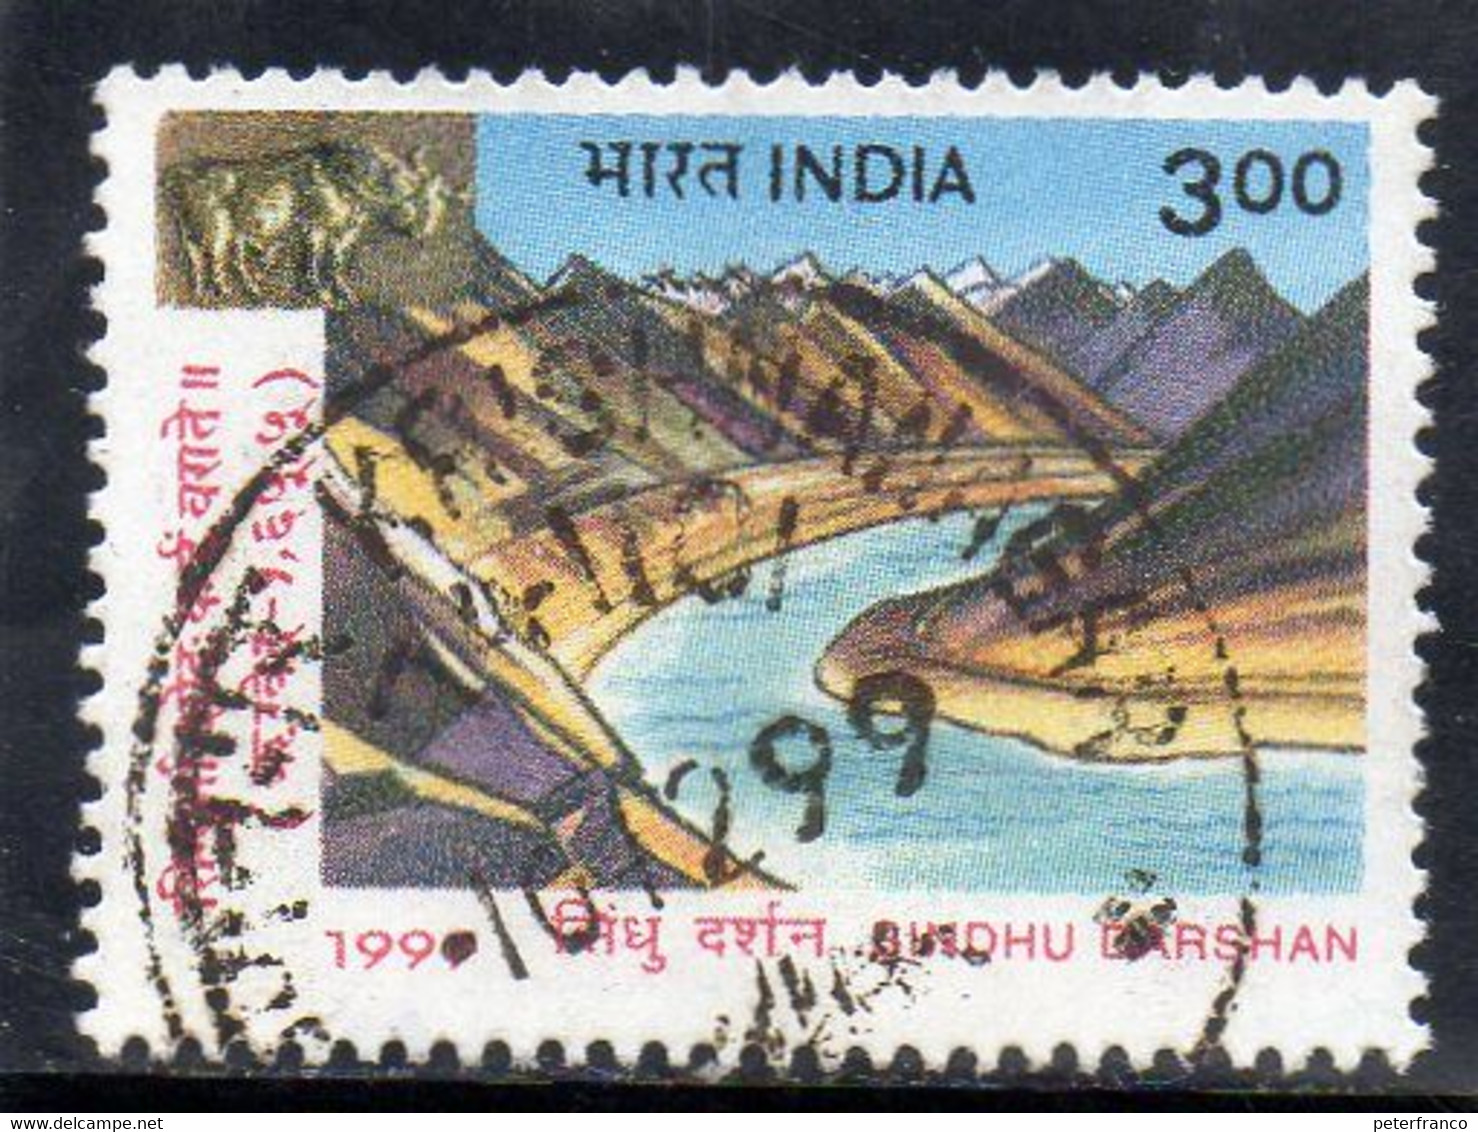 1999 India - Sindhu Darshan Festival - Gebruikt